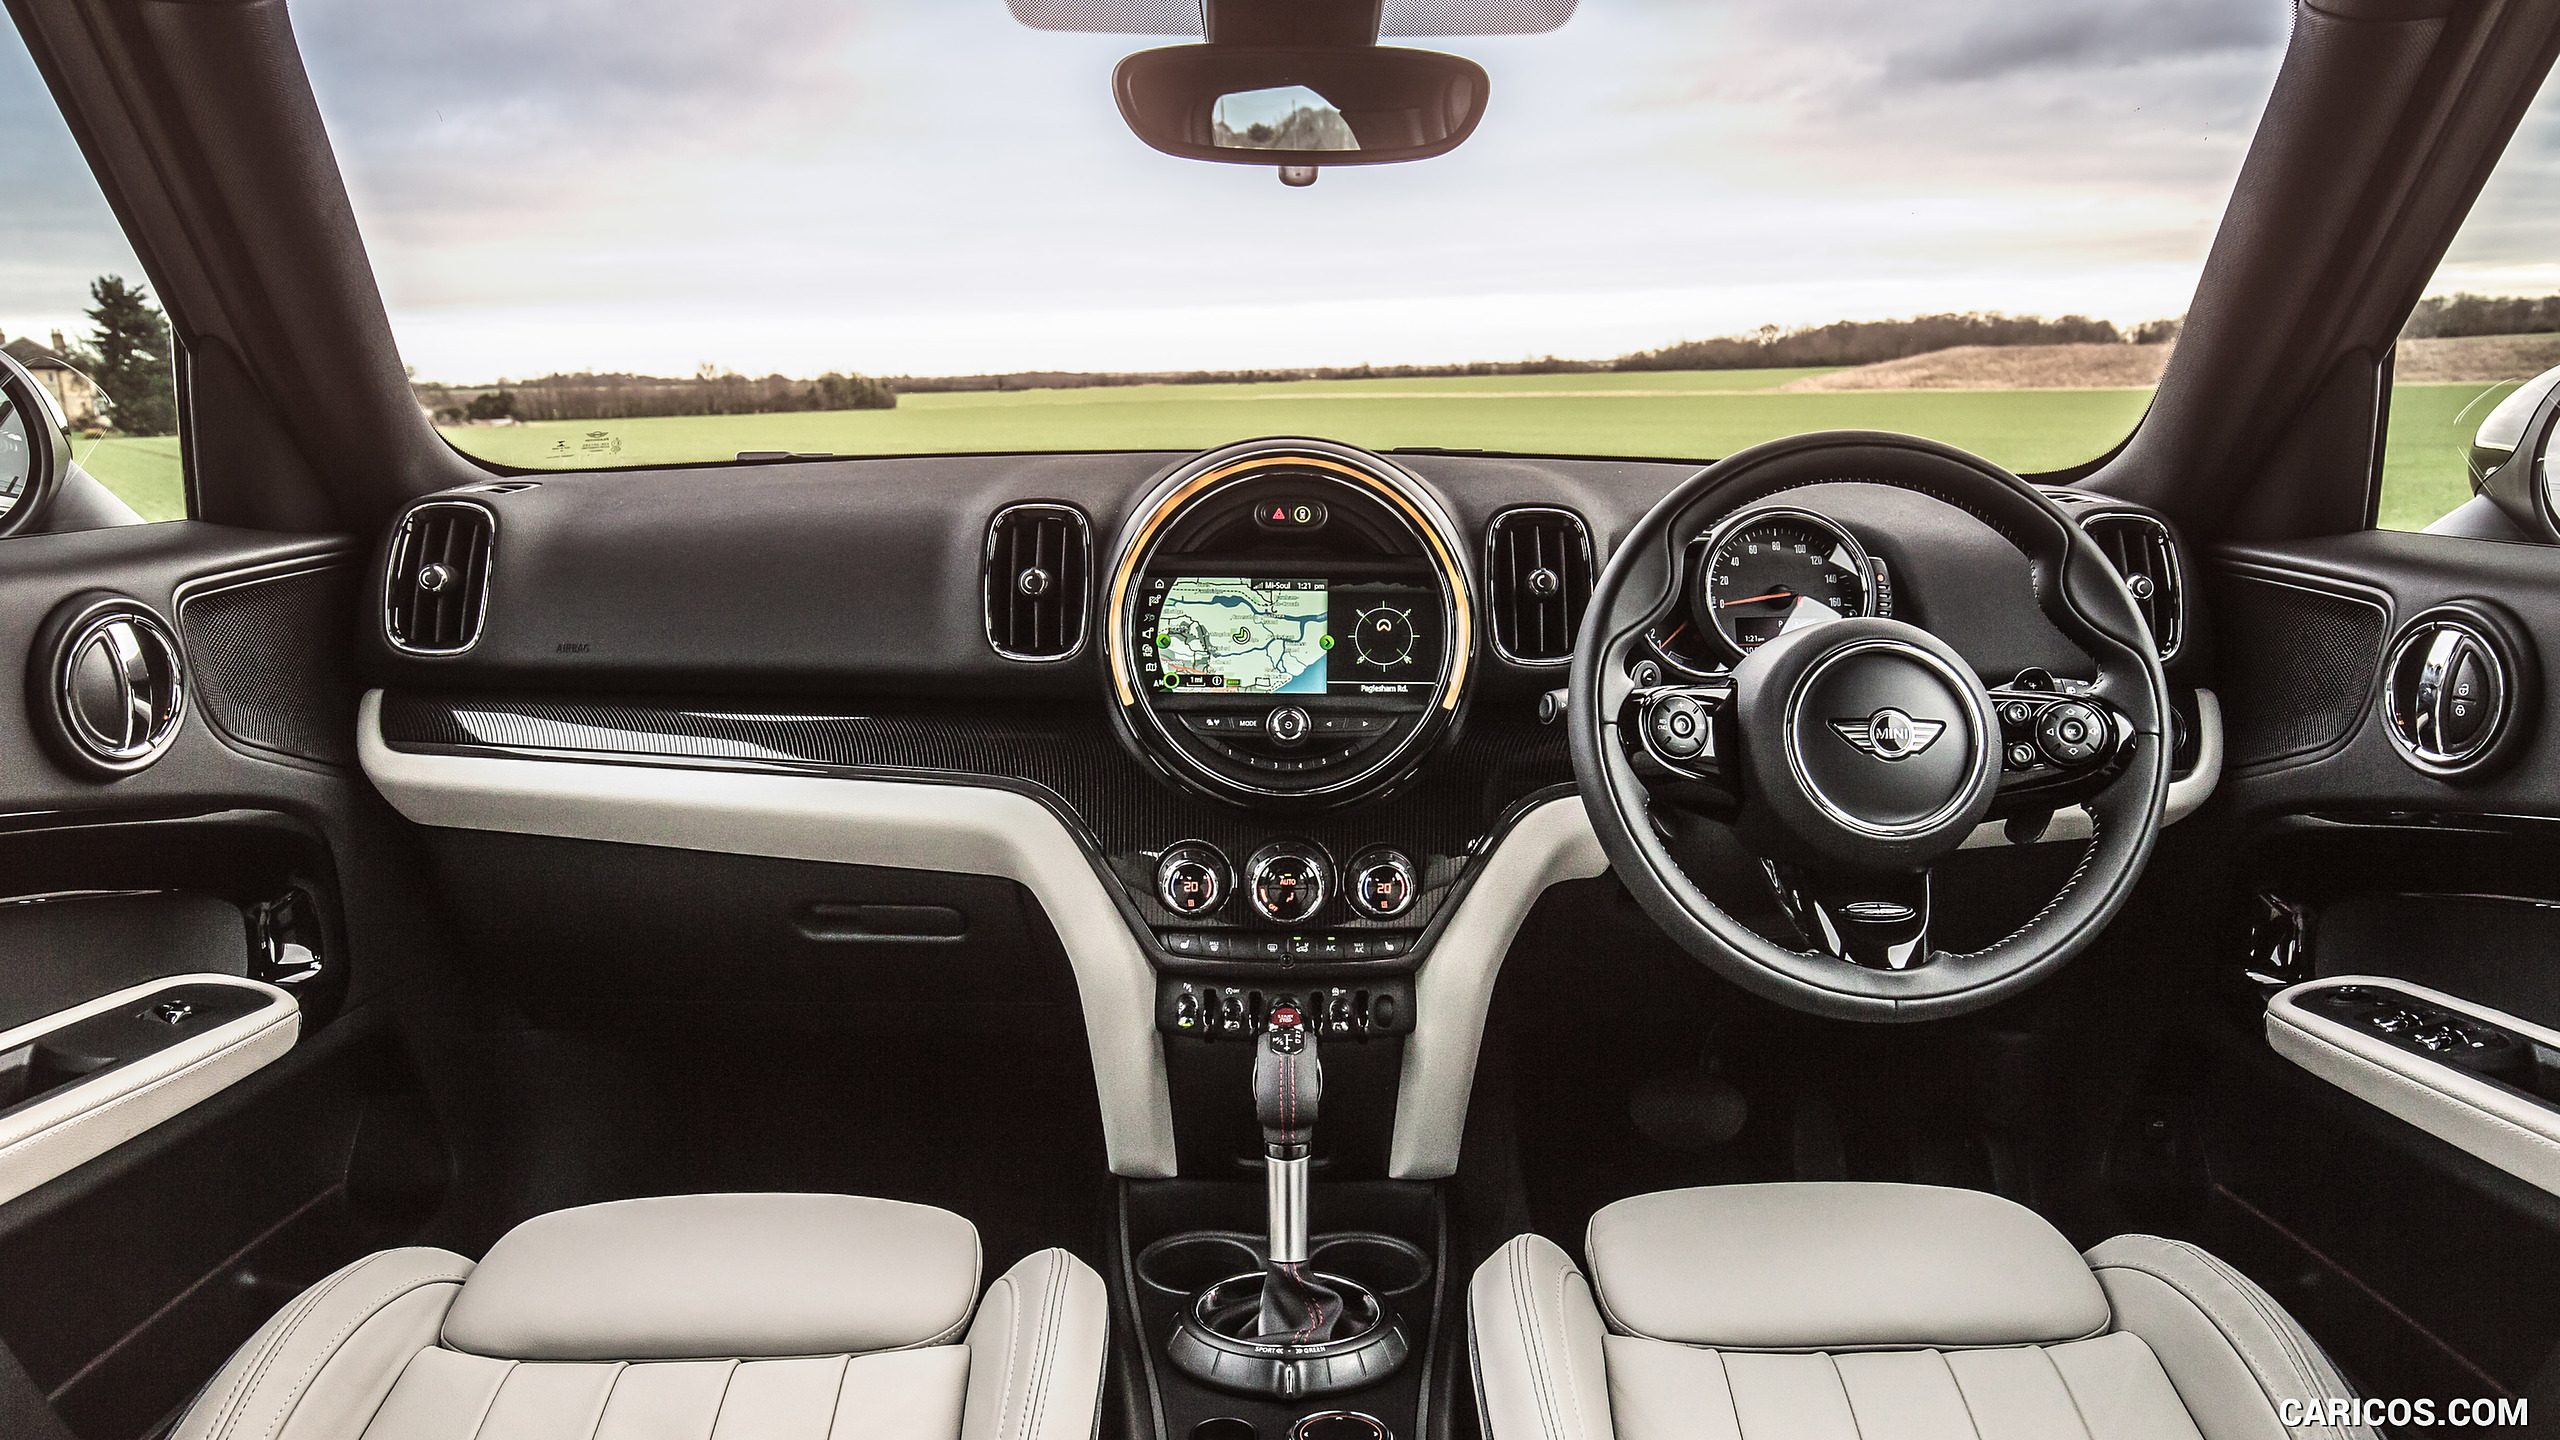 2017 MINI Cooper S Countryman (UK-Spec) - Interior, Cockpit, #365 of 372